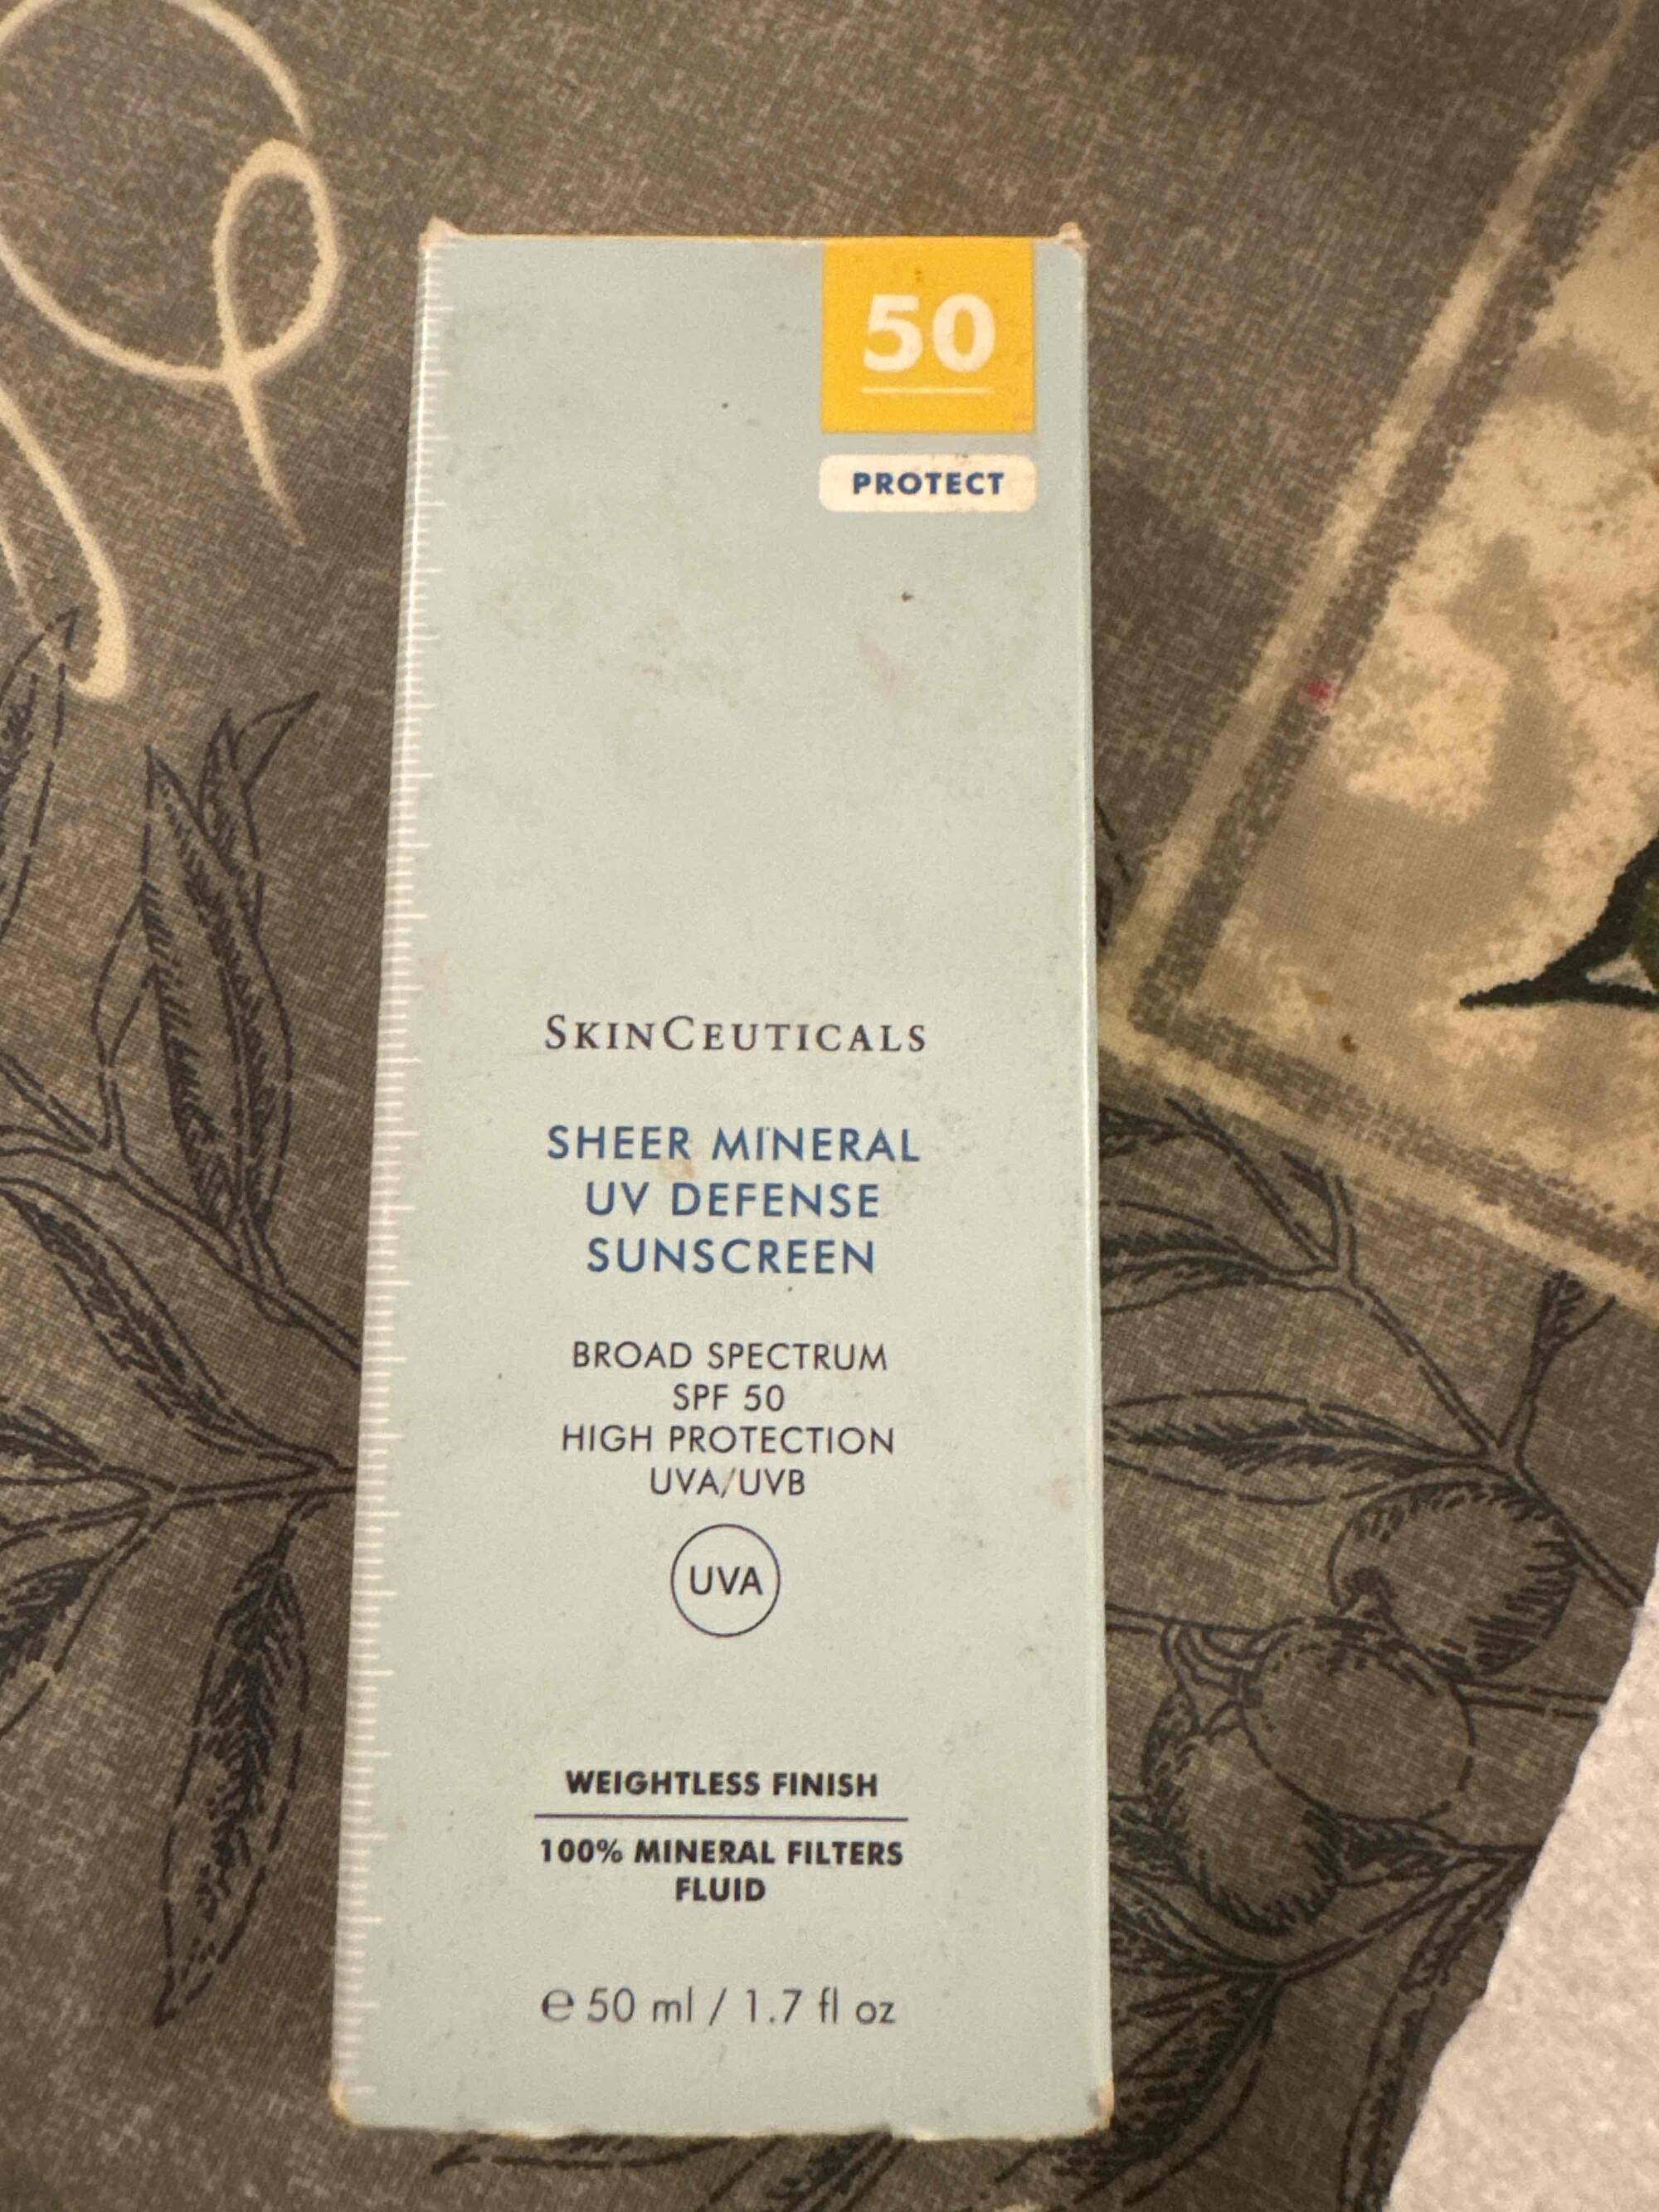 SKINCEUTICALS - Sheer mineral UV defense sunscreen